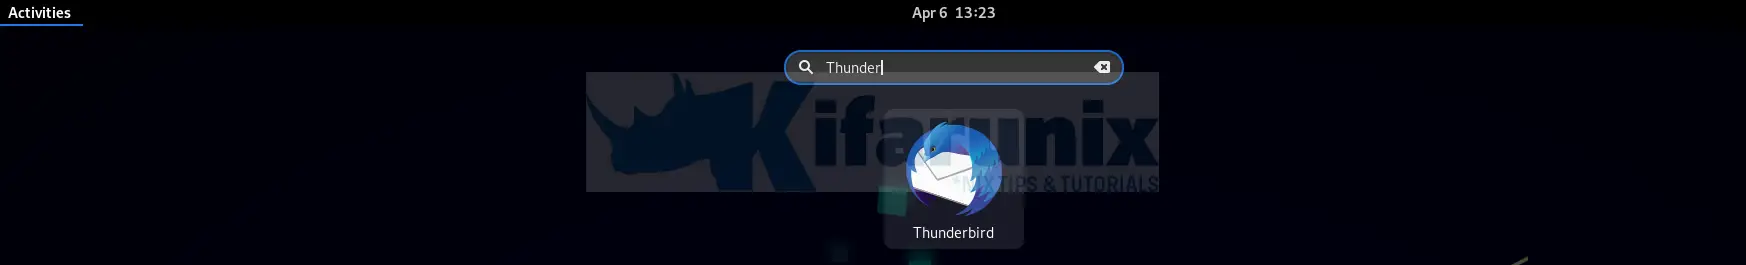 Install Thunderbird mail client on Debian 11/Debian 10